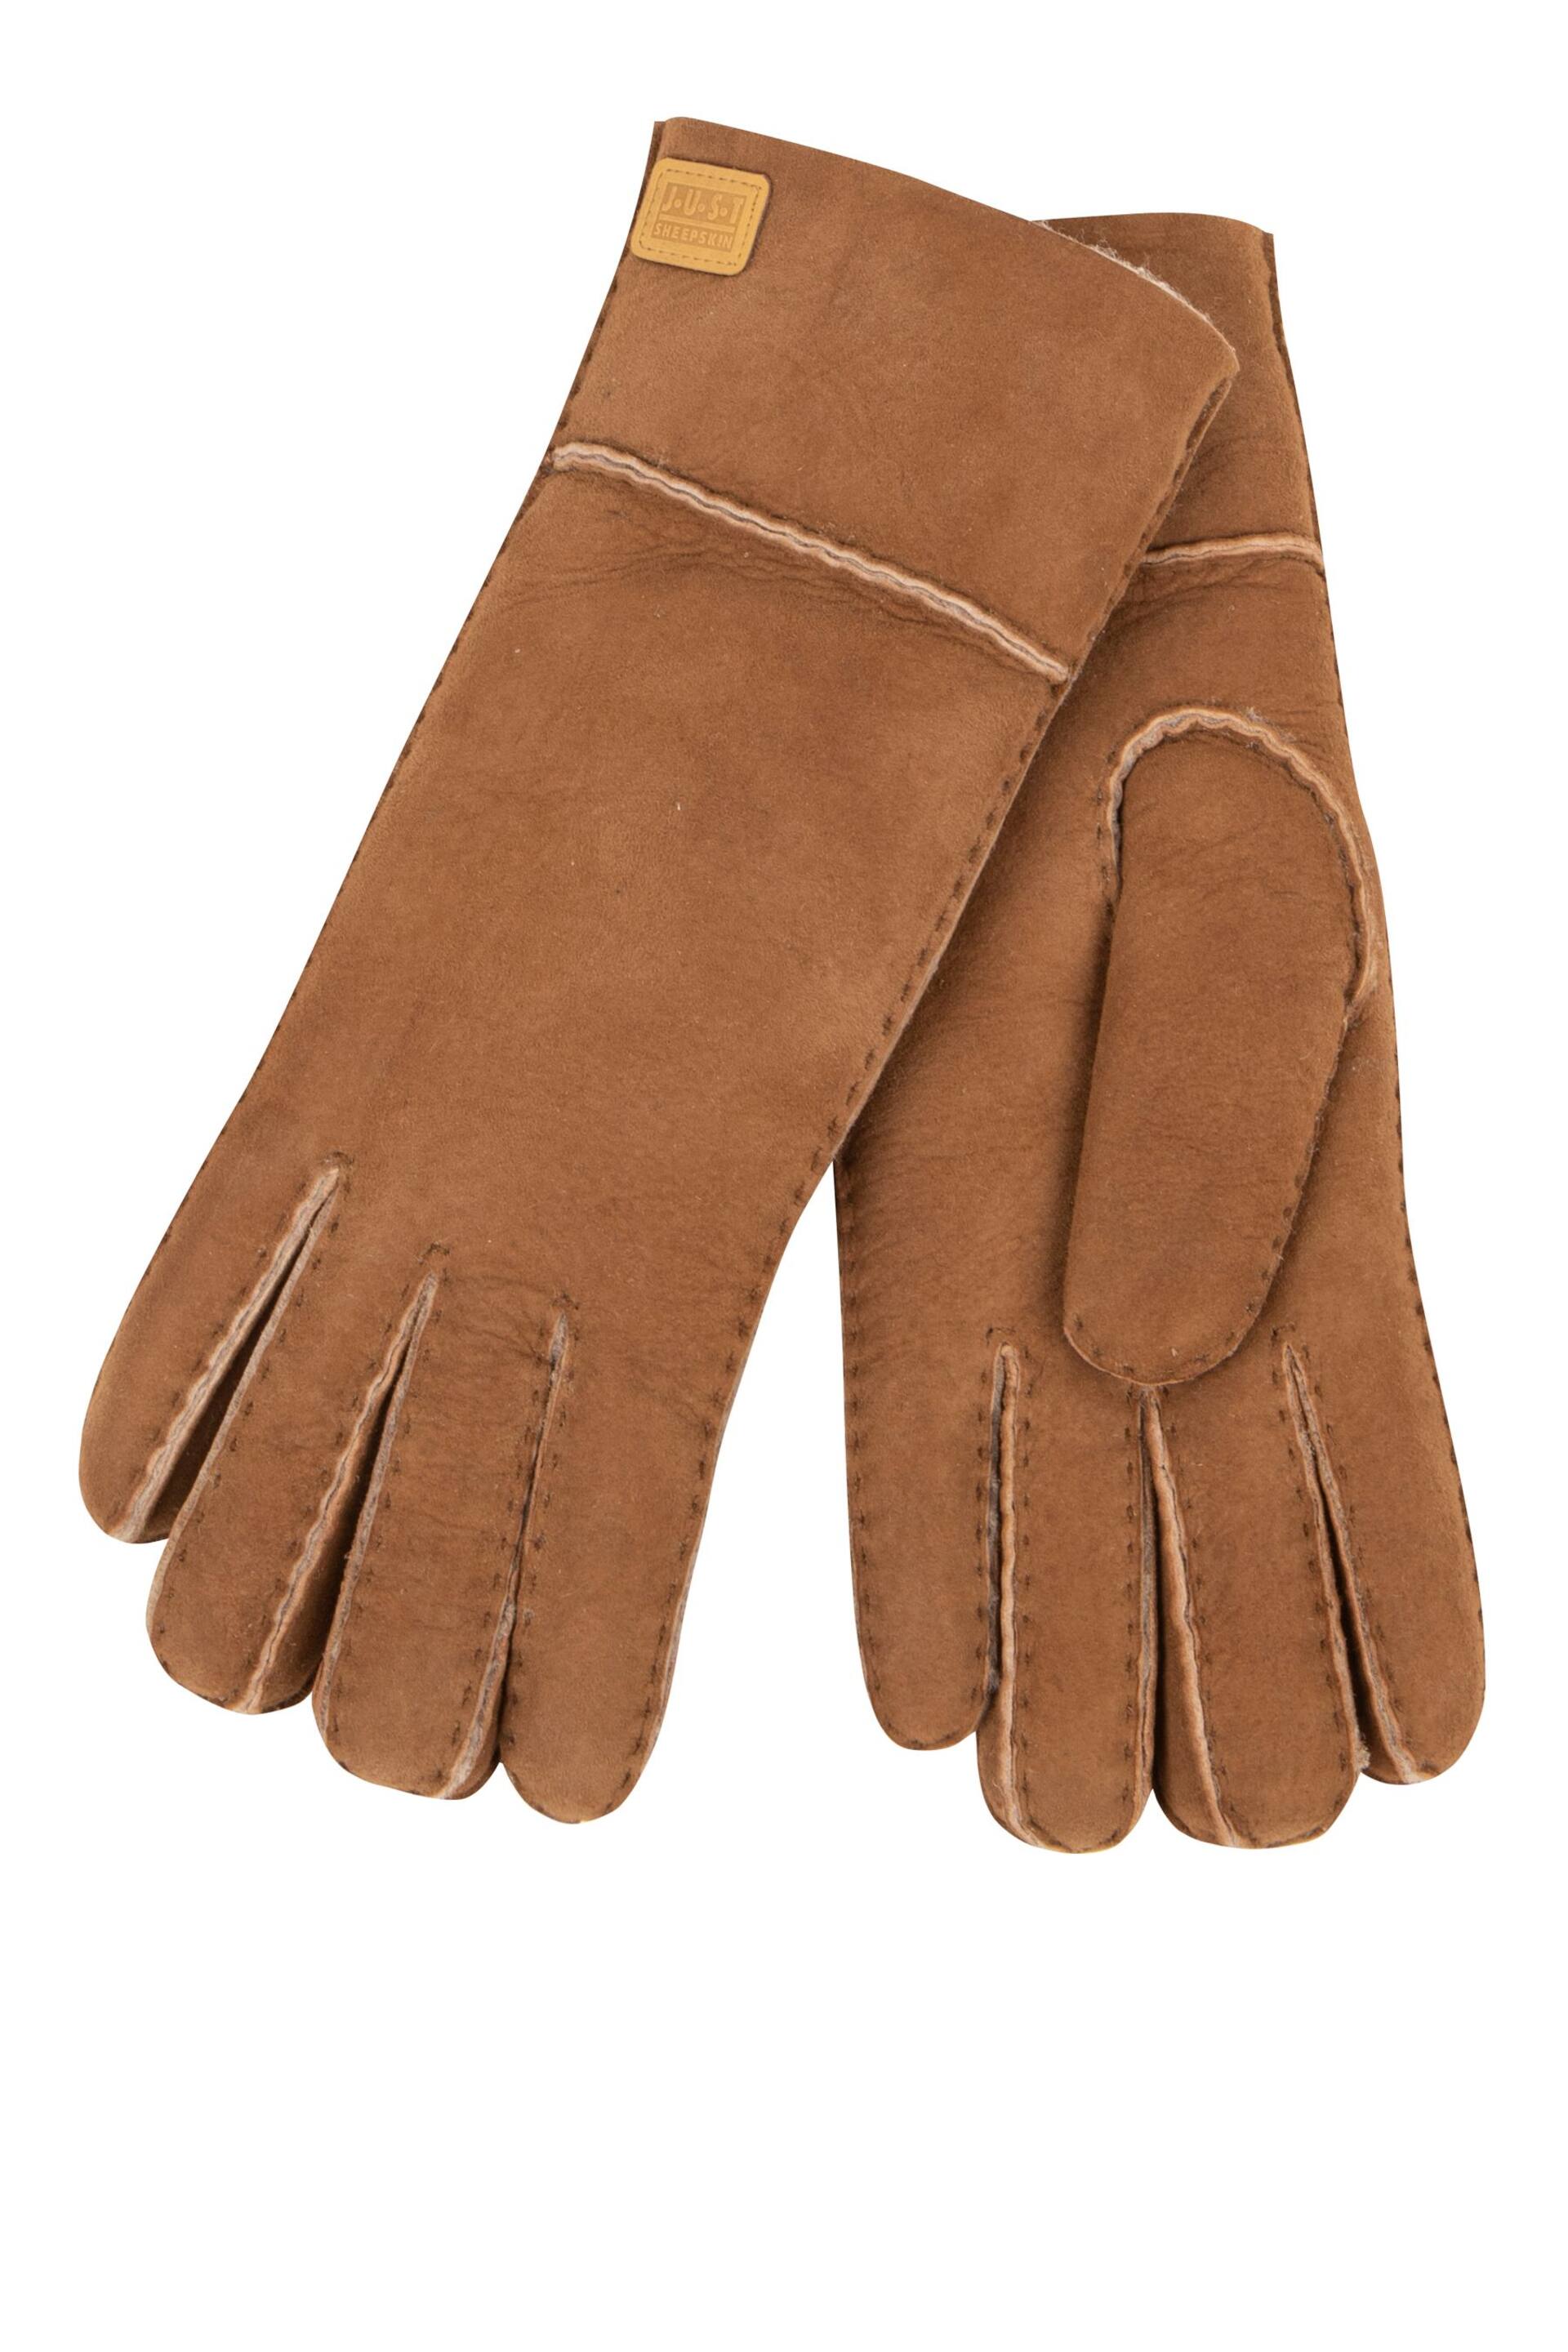 Just Sheepskin Brown Ladies Charlotte Gloves - Image 2 of 4